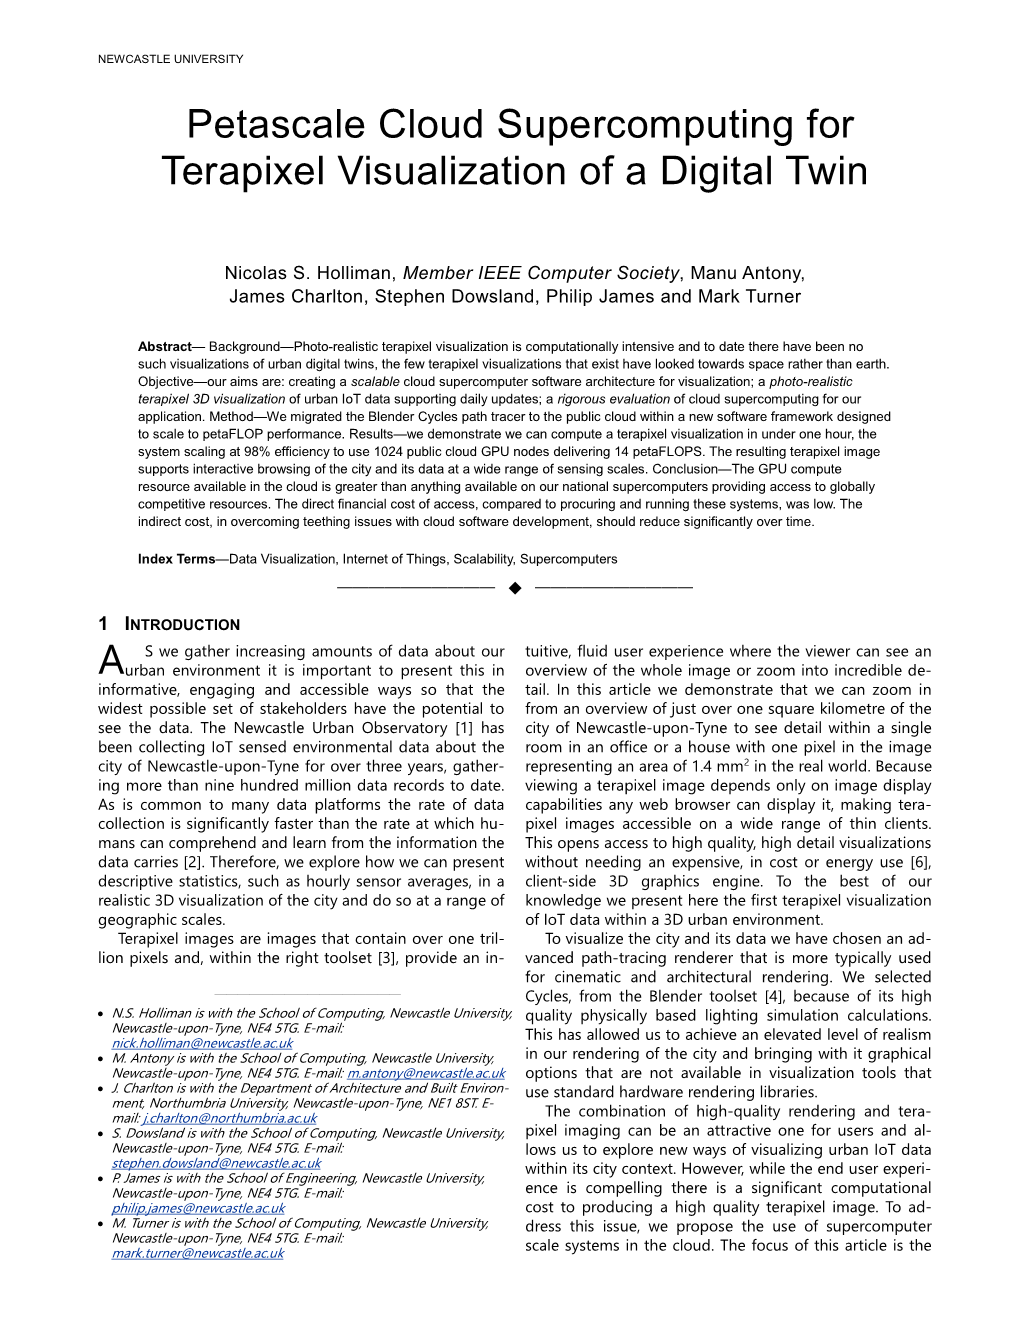 Petascale Cloud Supercomputing for Terapixel Visualization of a Digital Twin